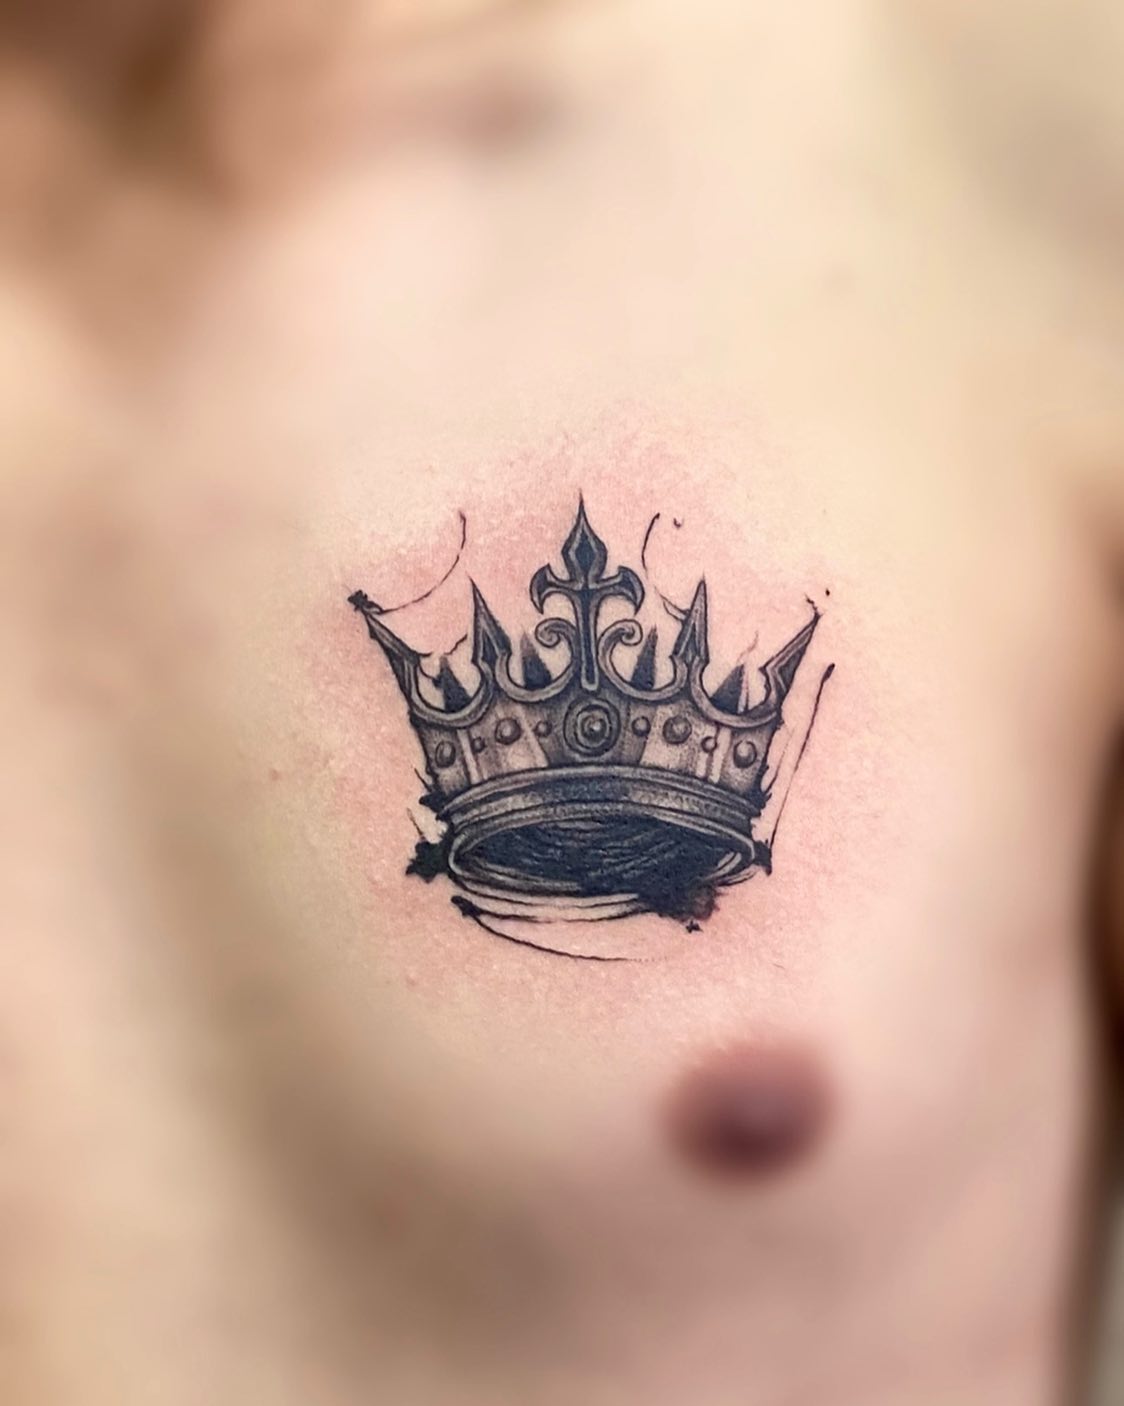 Tatuaje de Corona en el Pecho